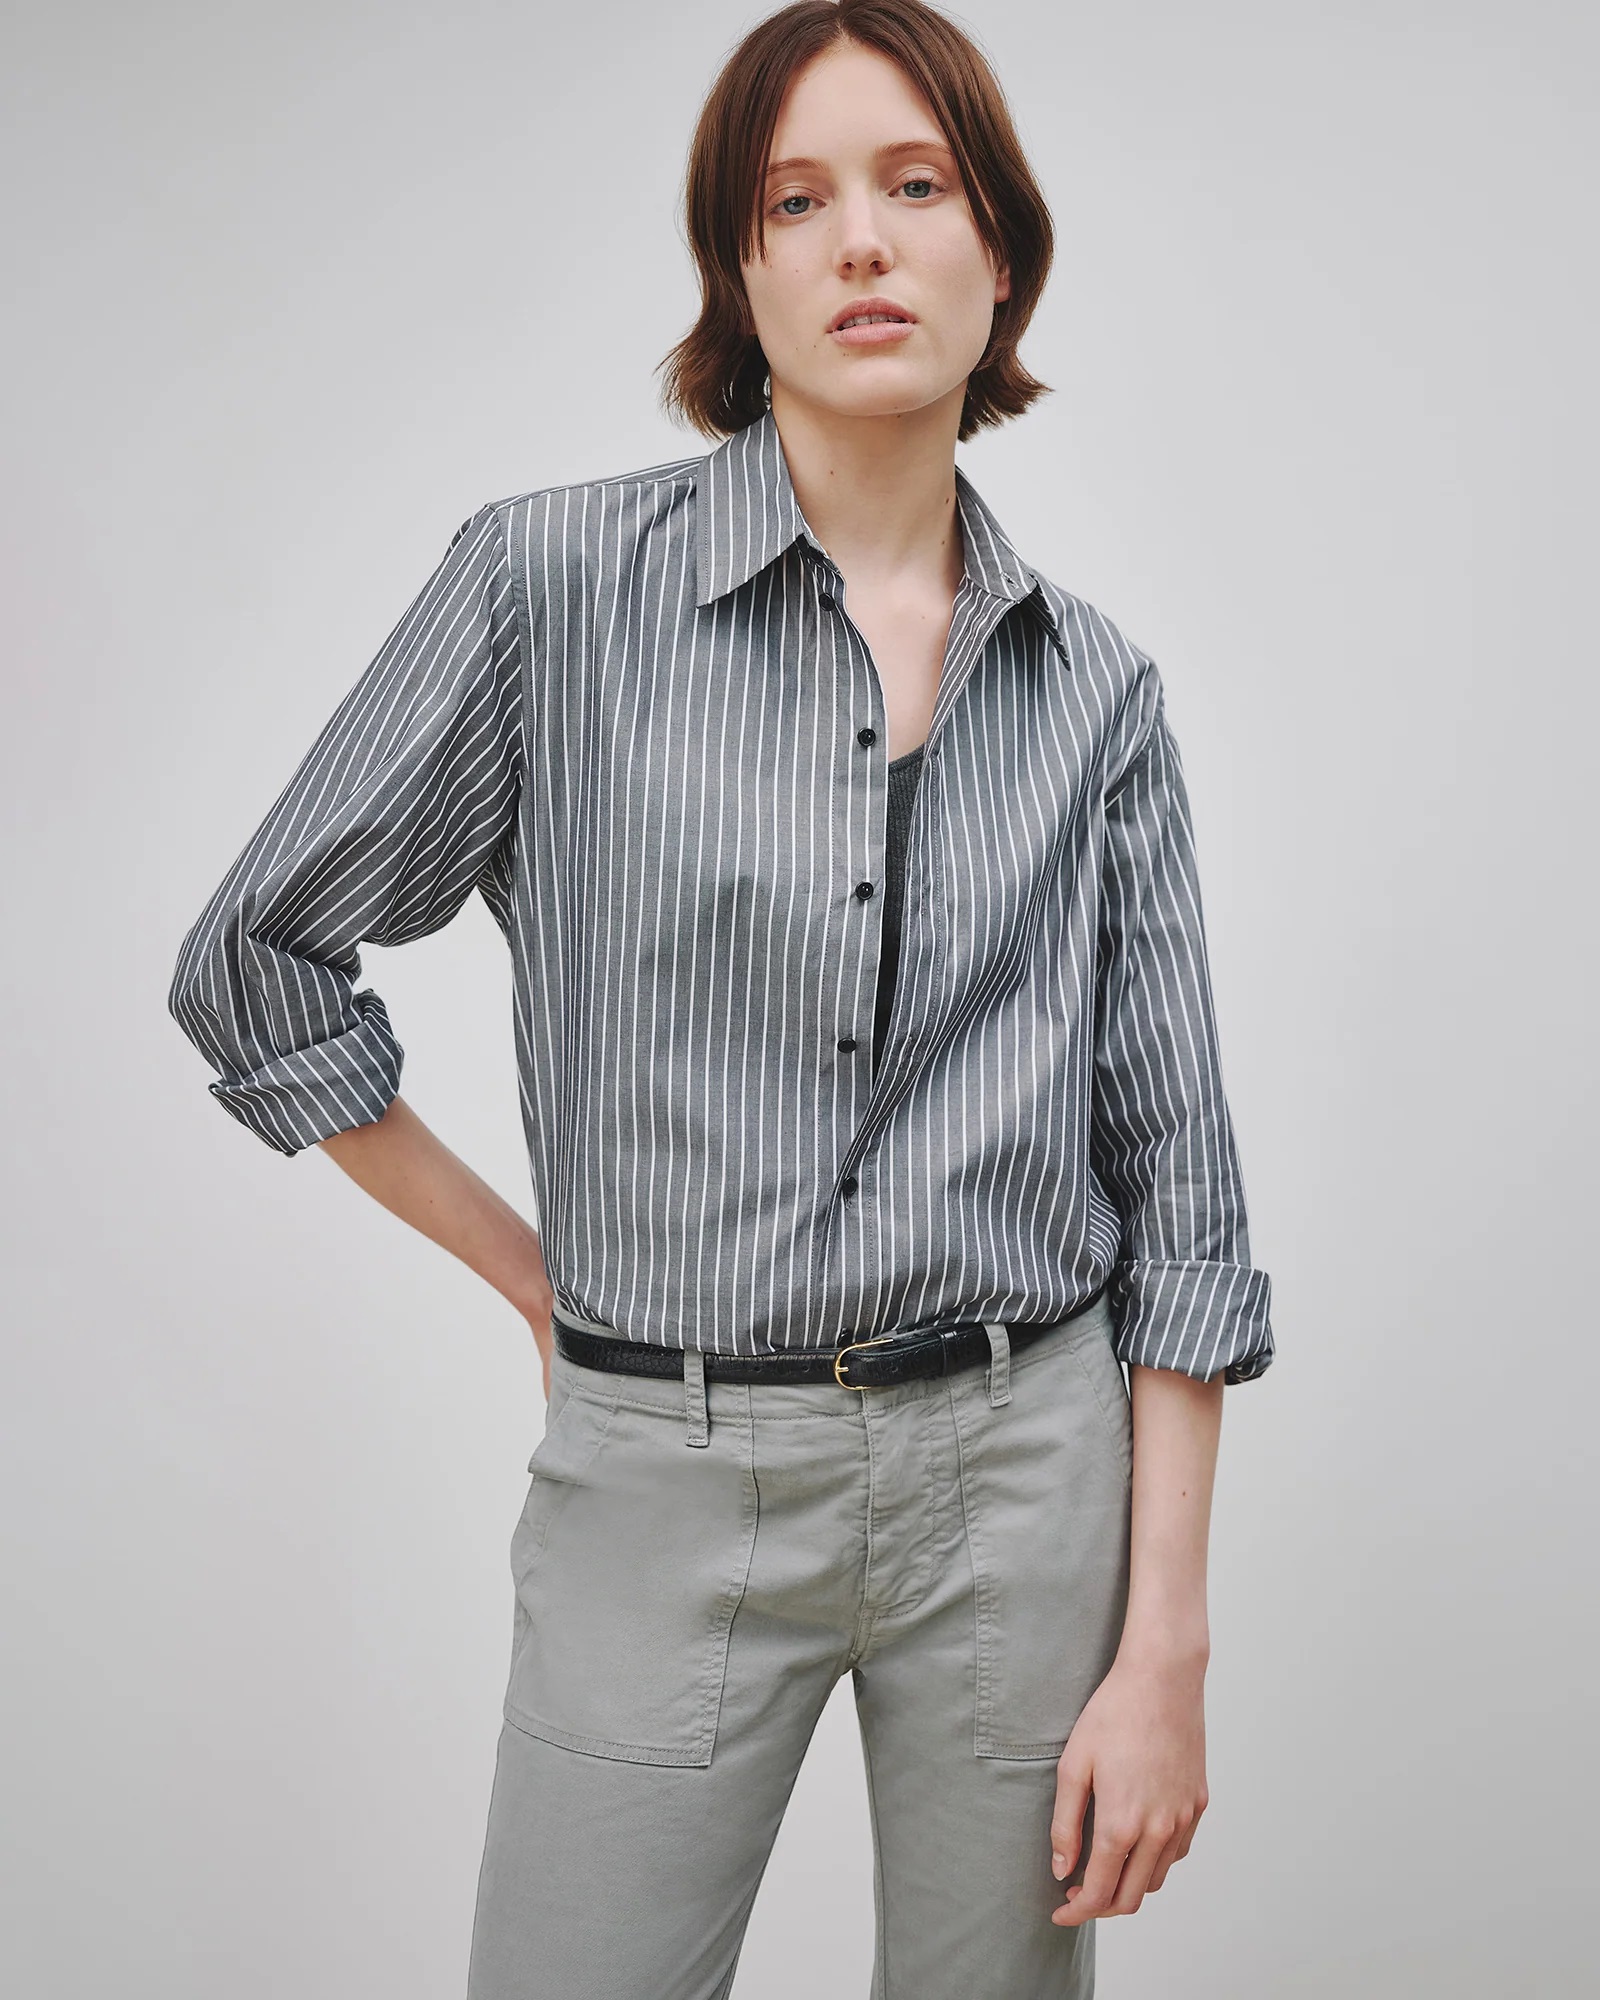 NILI LOTAN Raphael Classic Shirt in Black/White Stripe XS